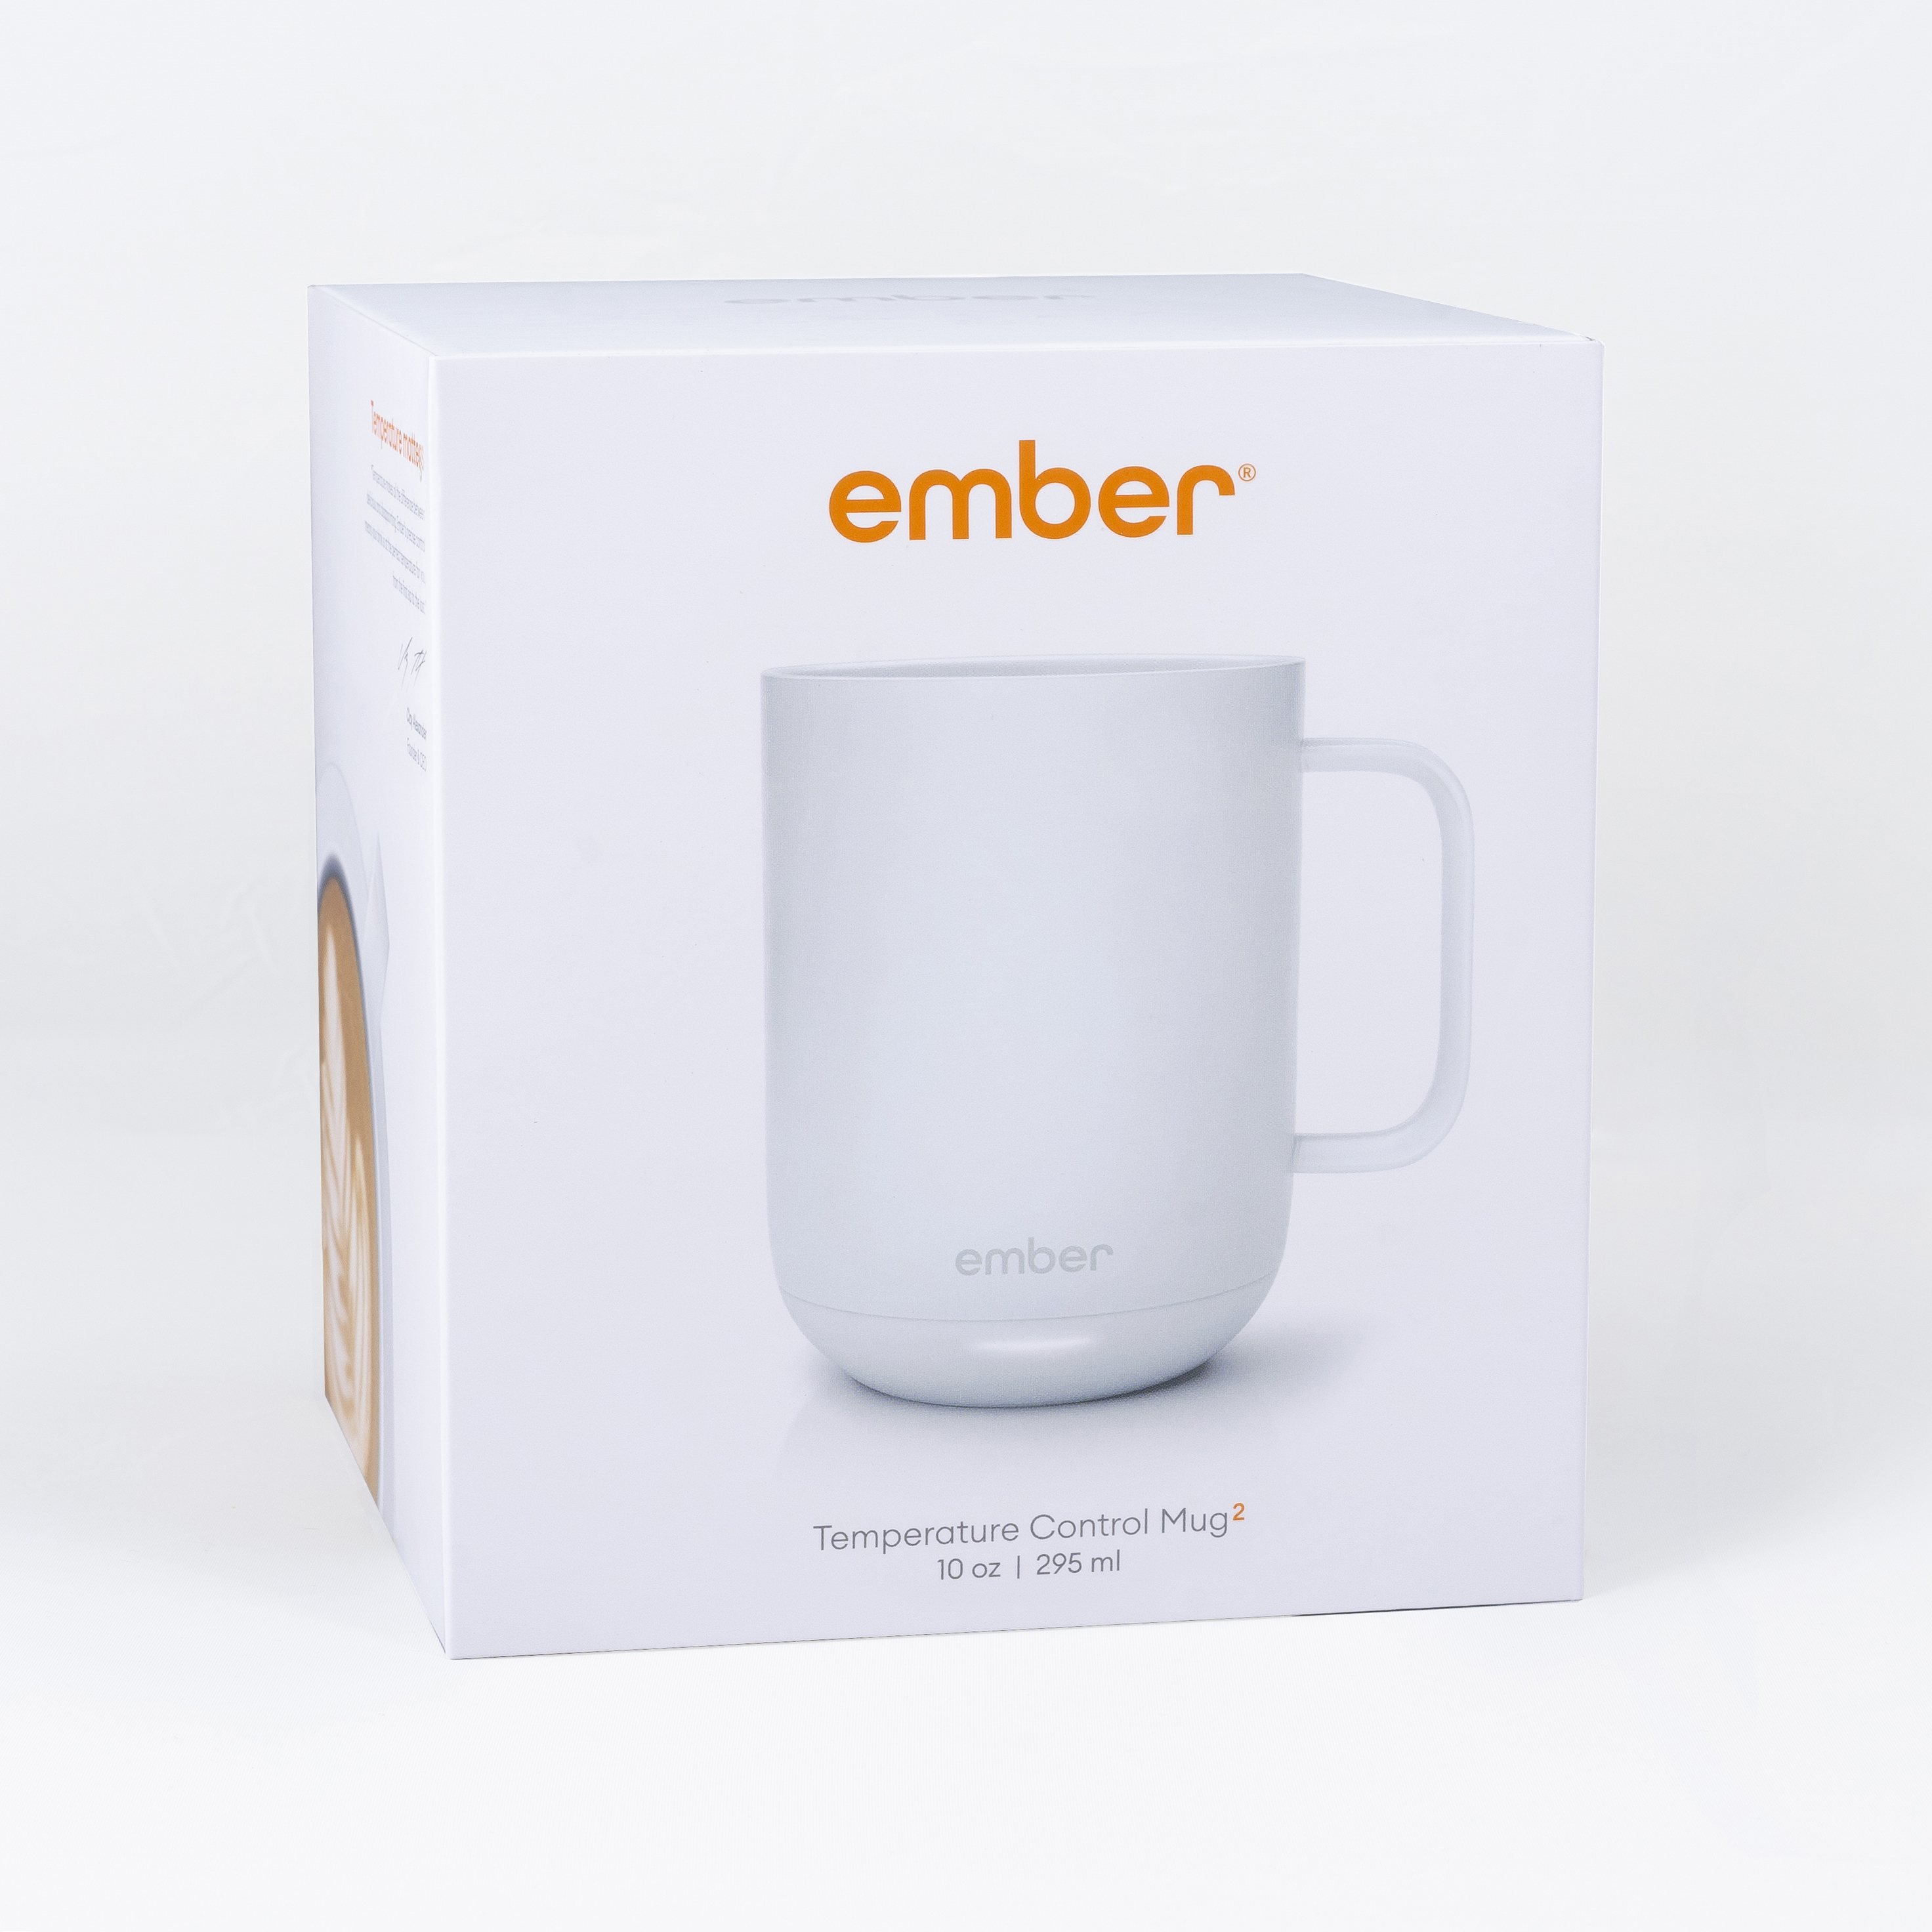 Ember Temperature Control Smart Mug 2, 10 oz, White, 1.5-hr Battery Life - App Controlled Heated Coffee Mug - Improved Design - image 9 of 9